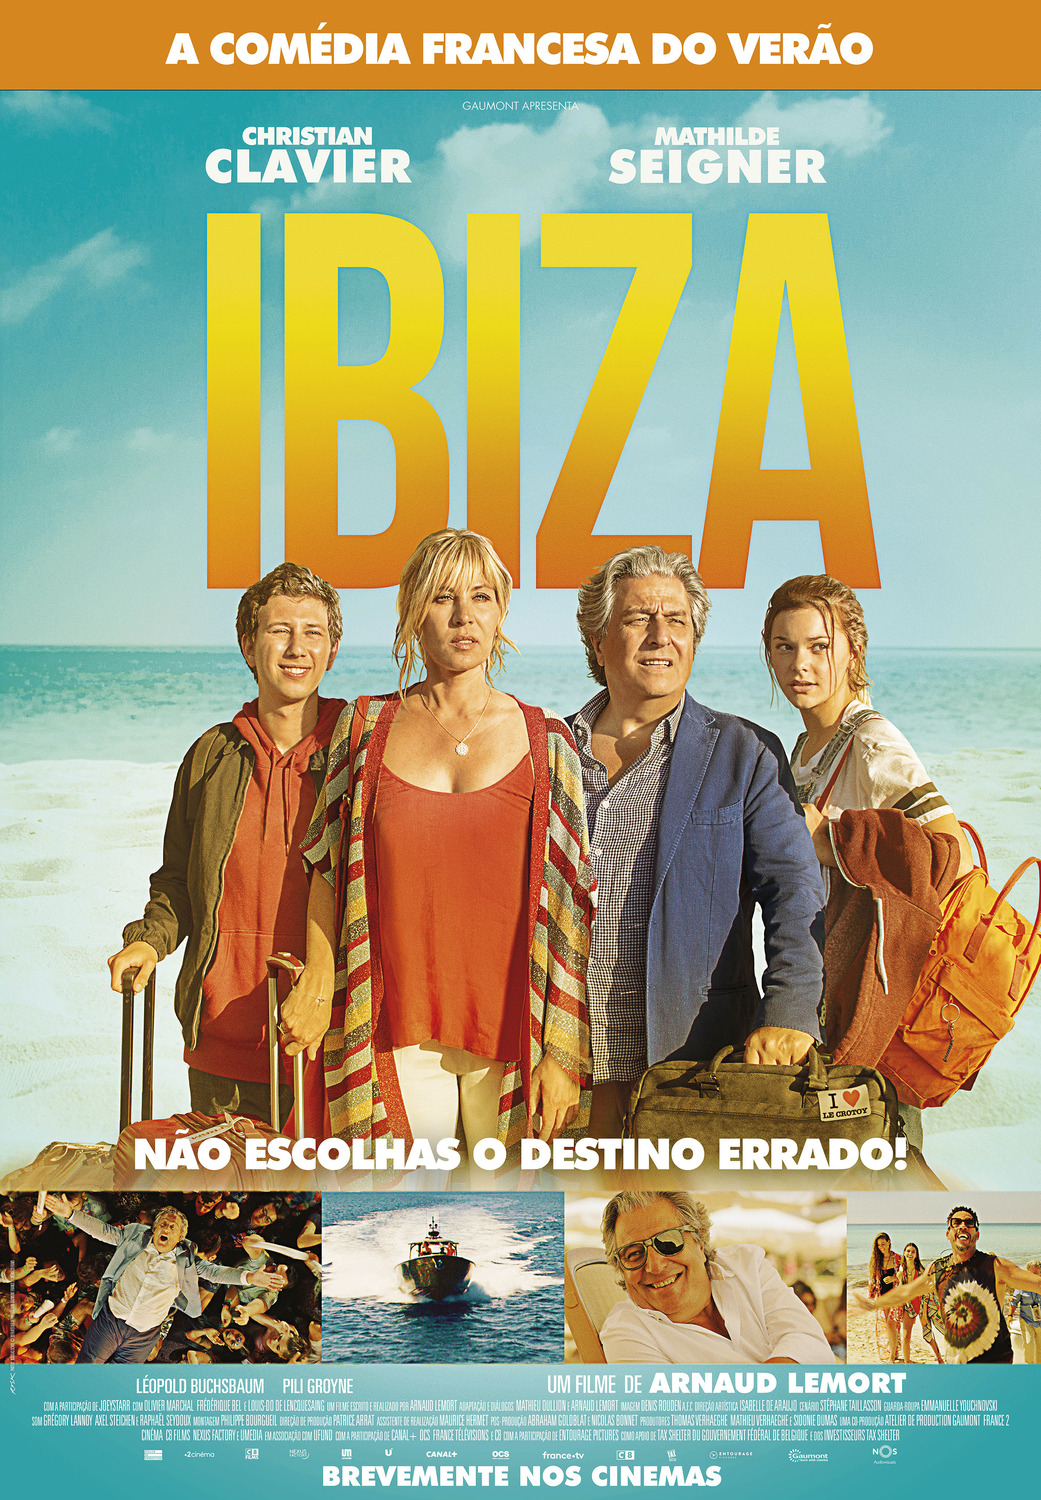 Extra Large Movie Poster Image for Ibiza 